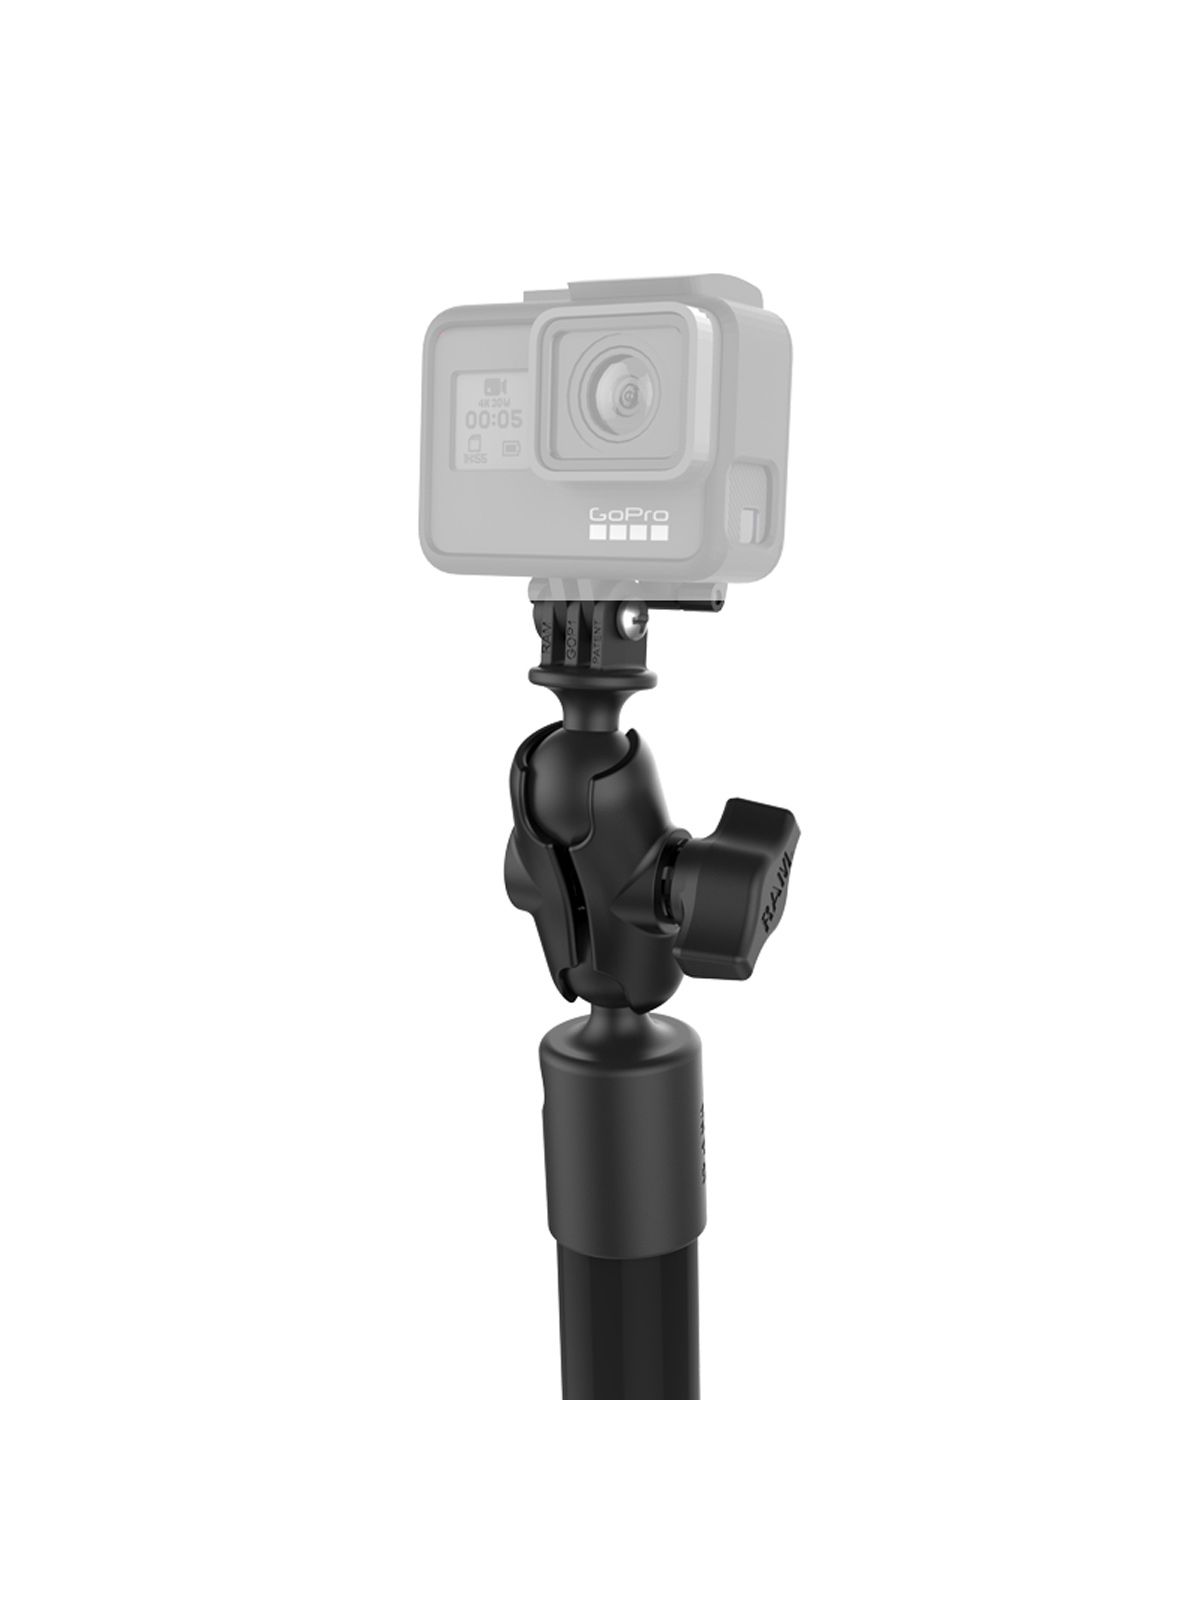 RAM Mounts Verbundstoff Kameraarm für GoPro Action Kameras - mit Arm (18 Zoll), GoPro-Adapter, B-Kugel (1 Zoll)